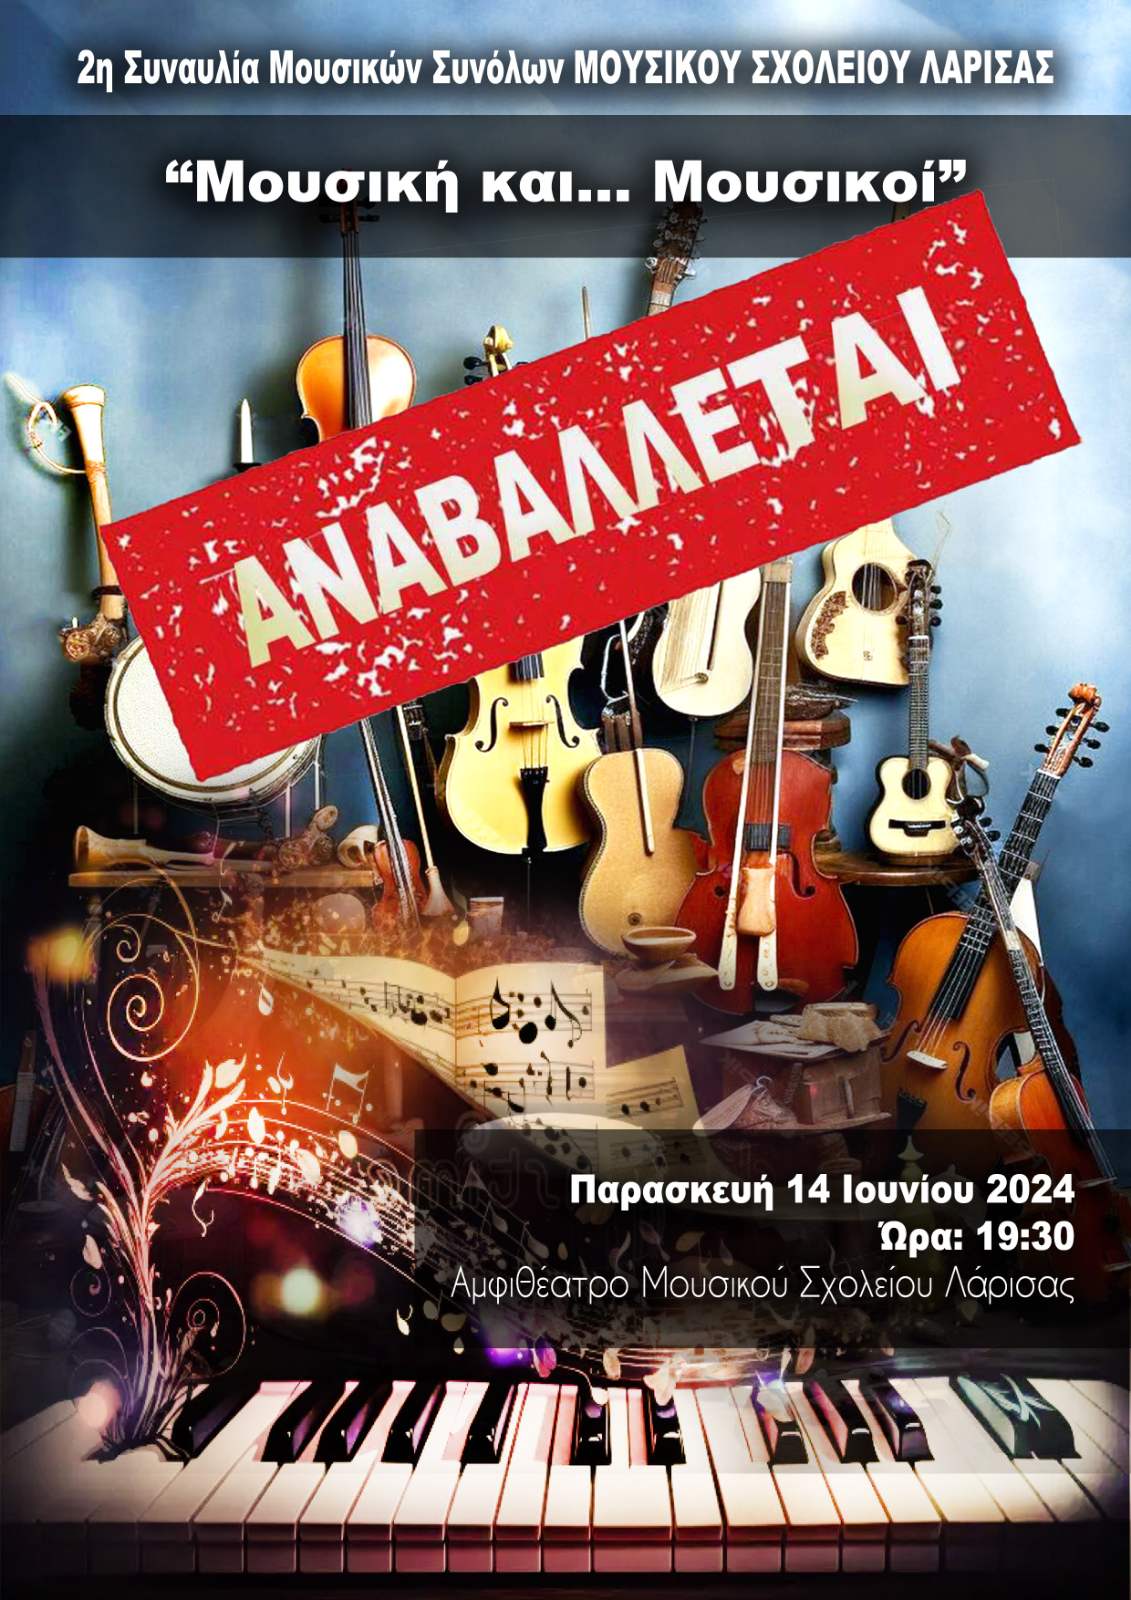 Aναβάλλεται η 2η ετήσια συναυλία μουσικών συνόλων του Μουσικού Σχολείου Λάρισας